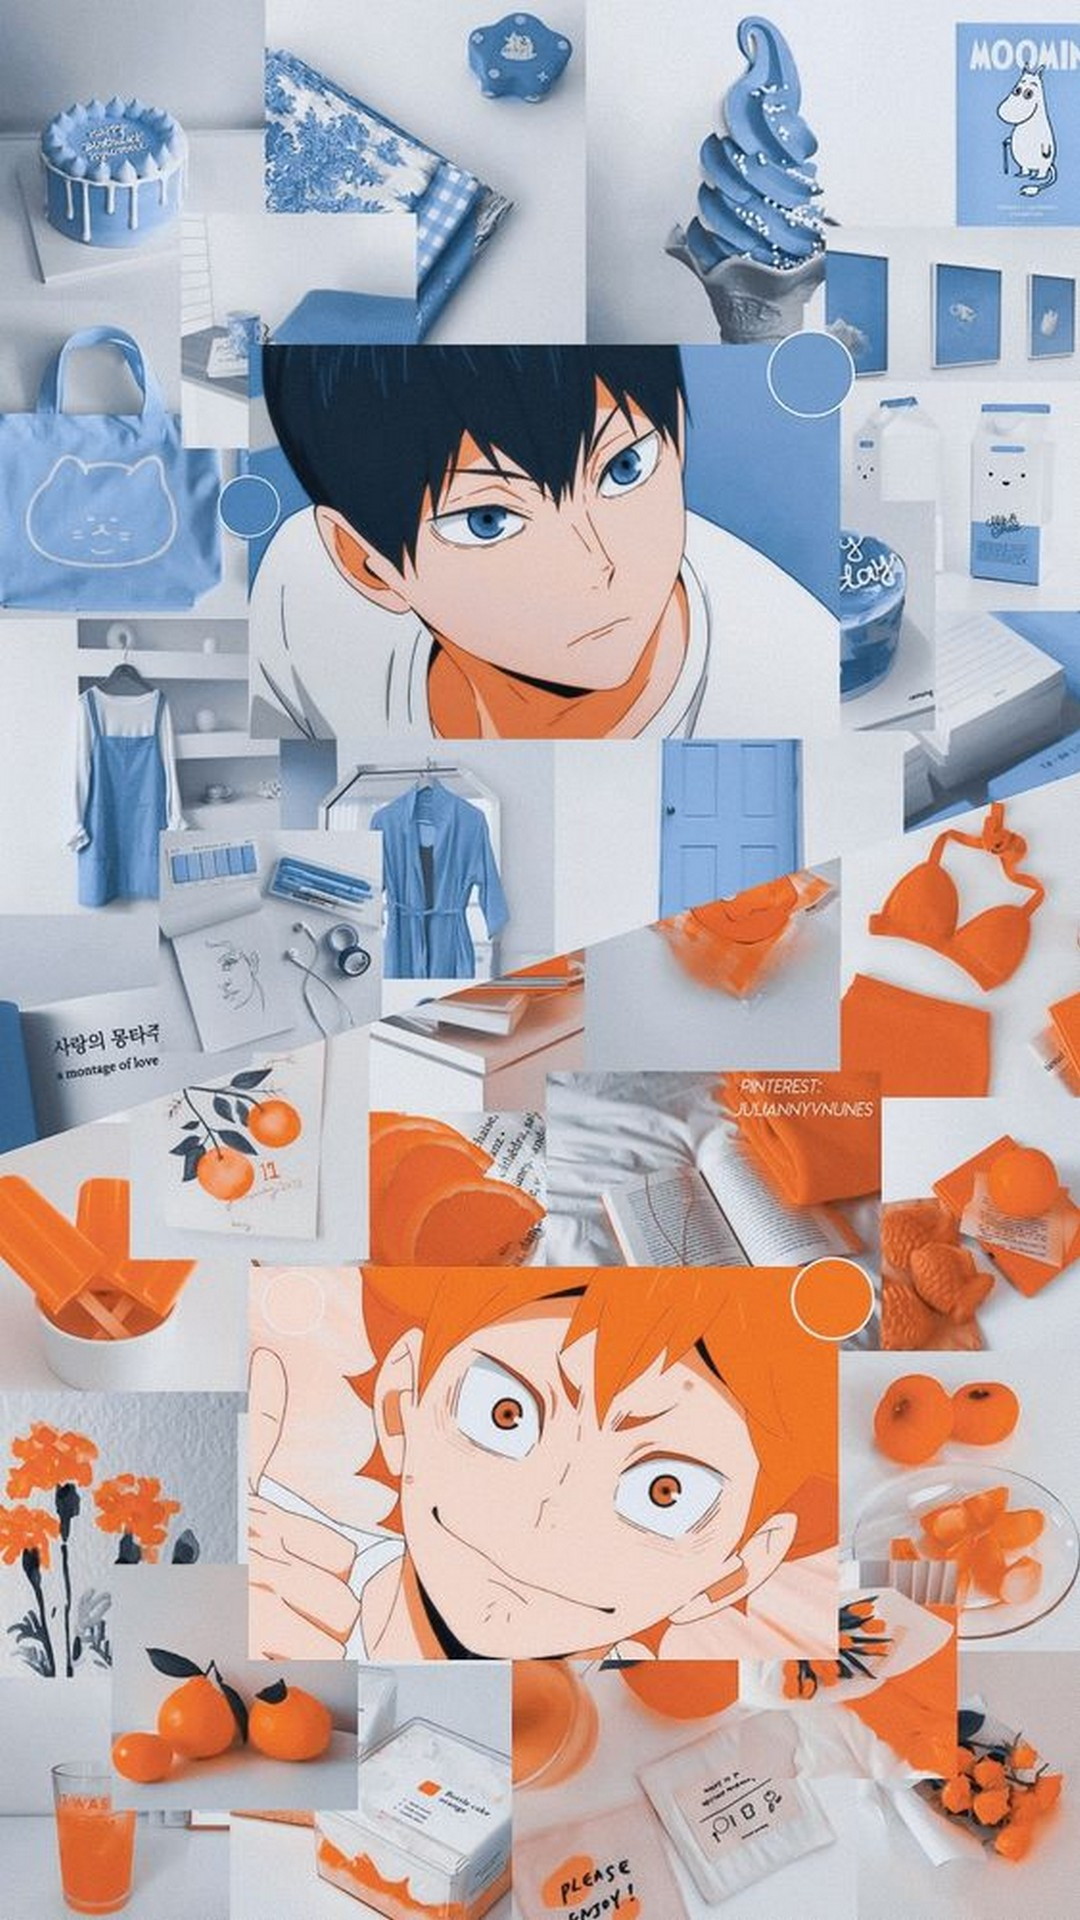 Aesthetic anime wallpaper for phone of Haikyuu with Hinata and Kageyama - Anime